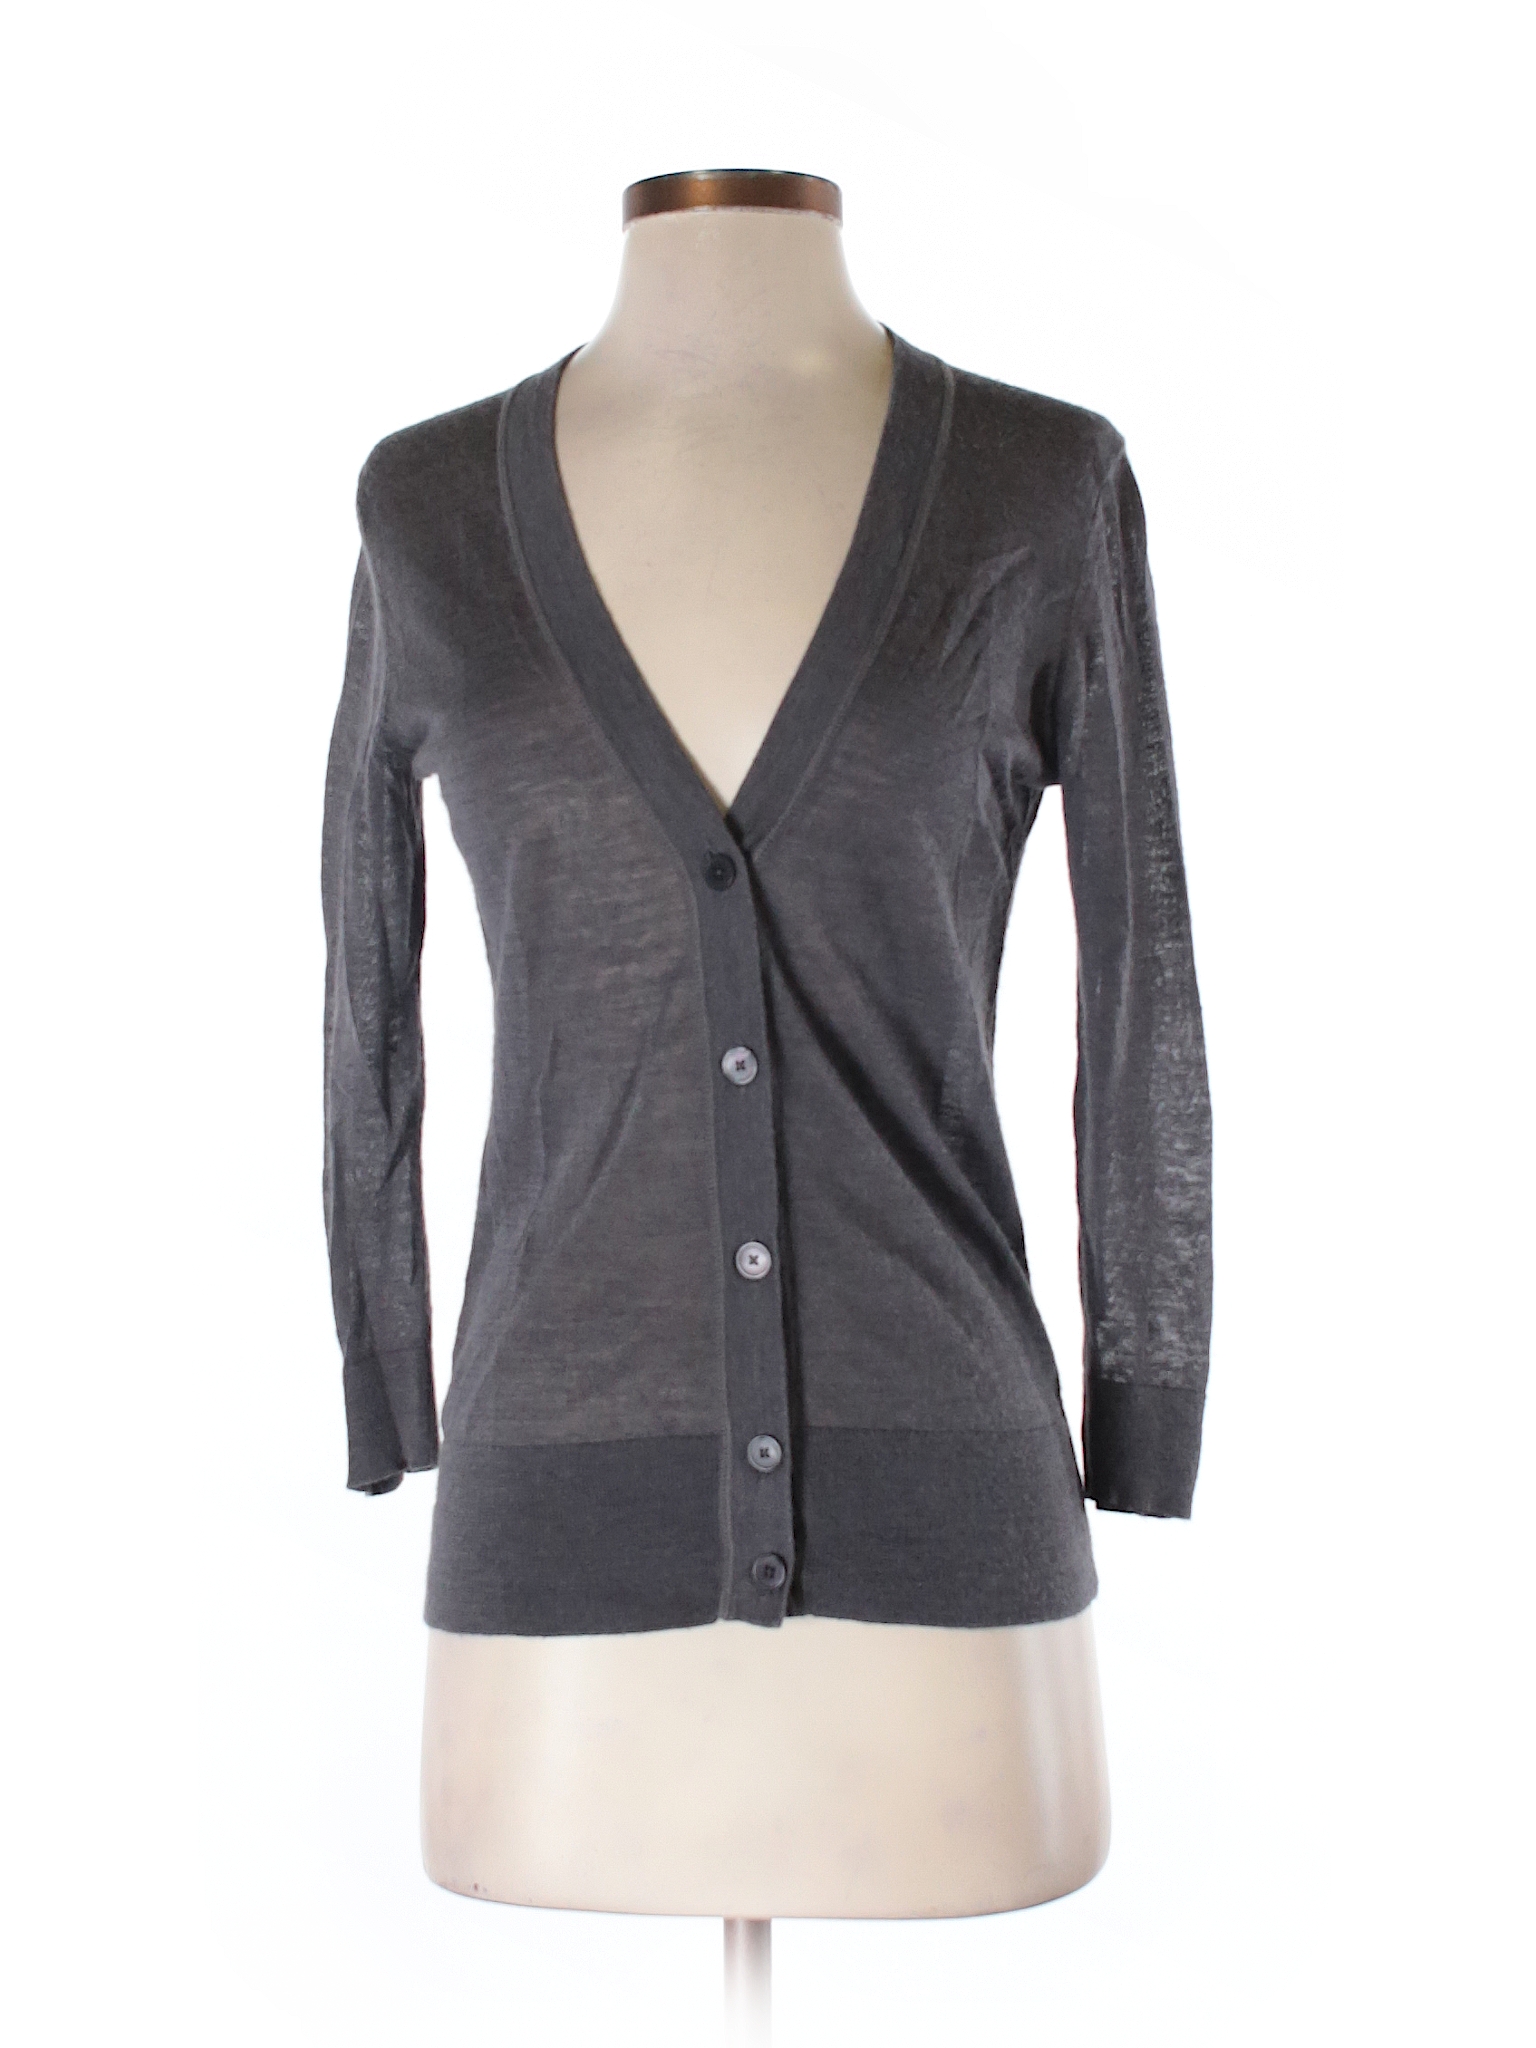 Ann Taylor LOFT Solid Gray Cardigan Size XS - 70% off | thredUP